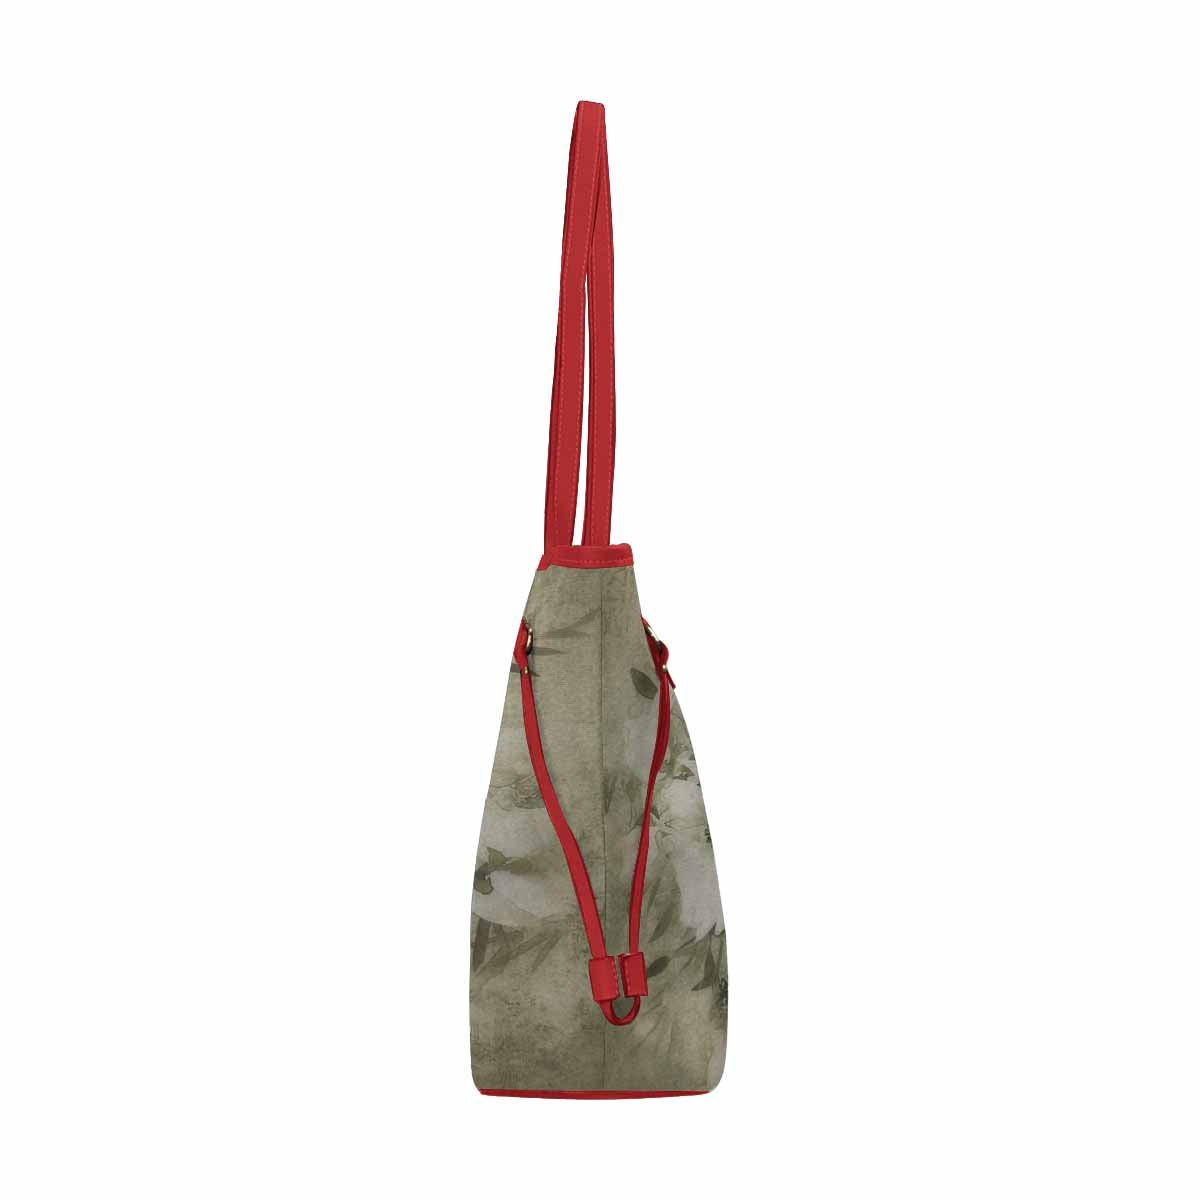 Vintage Floral Handbag, Classic Handbag, Mod 1695361 Design 03x, RED TRIM